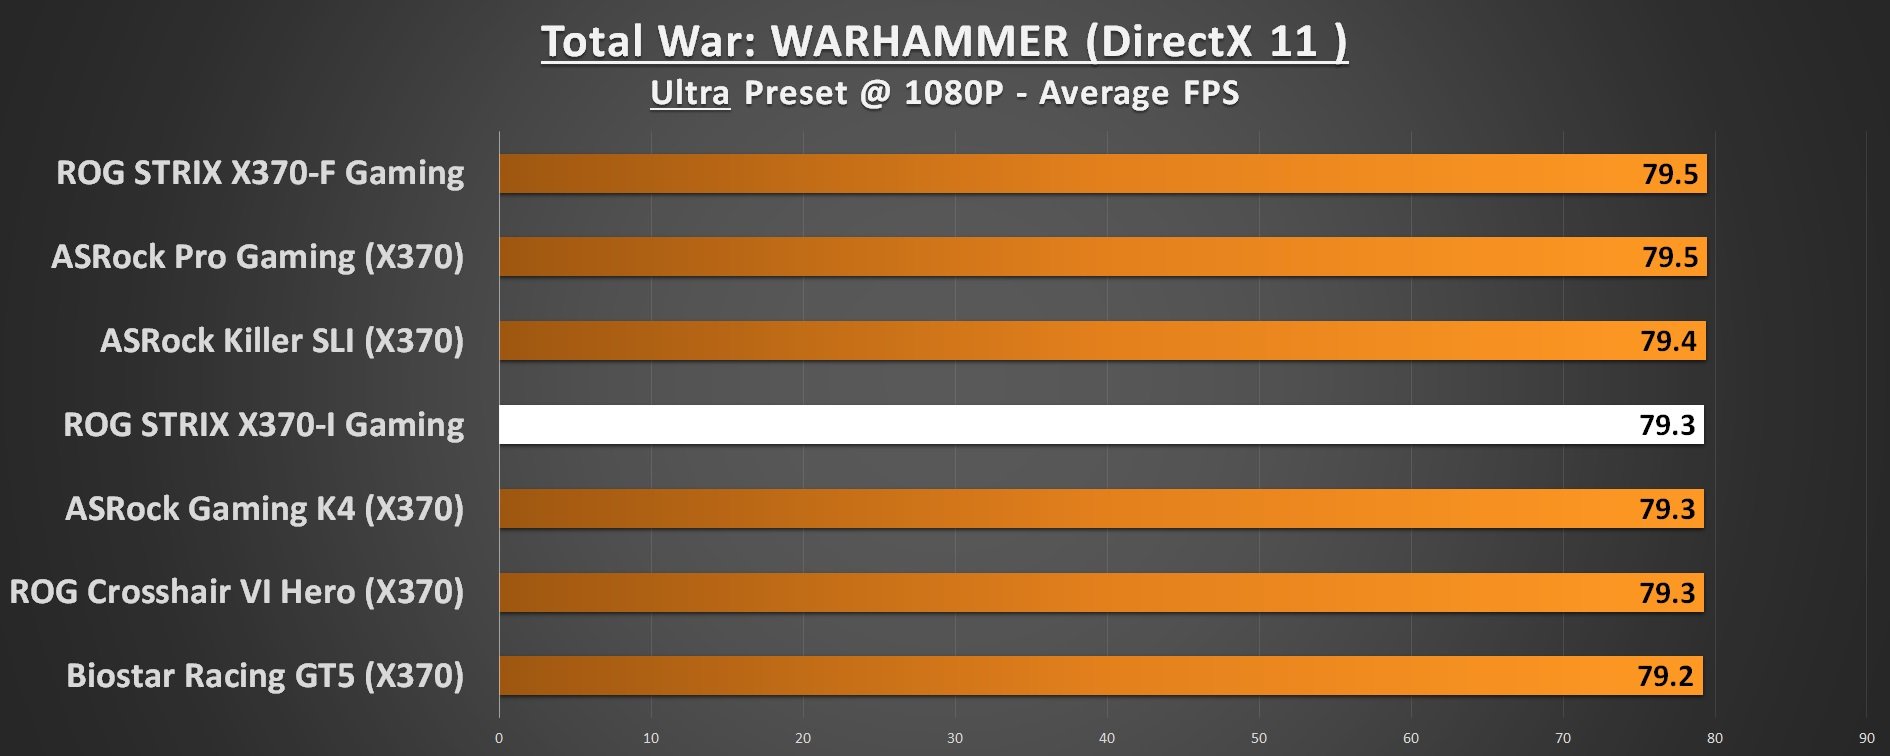 ASUS ROG STRIX X370-I Performance Total War Warhammer 1080p DirectX 11